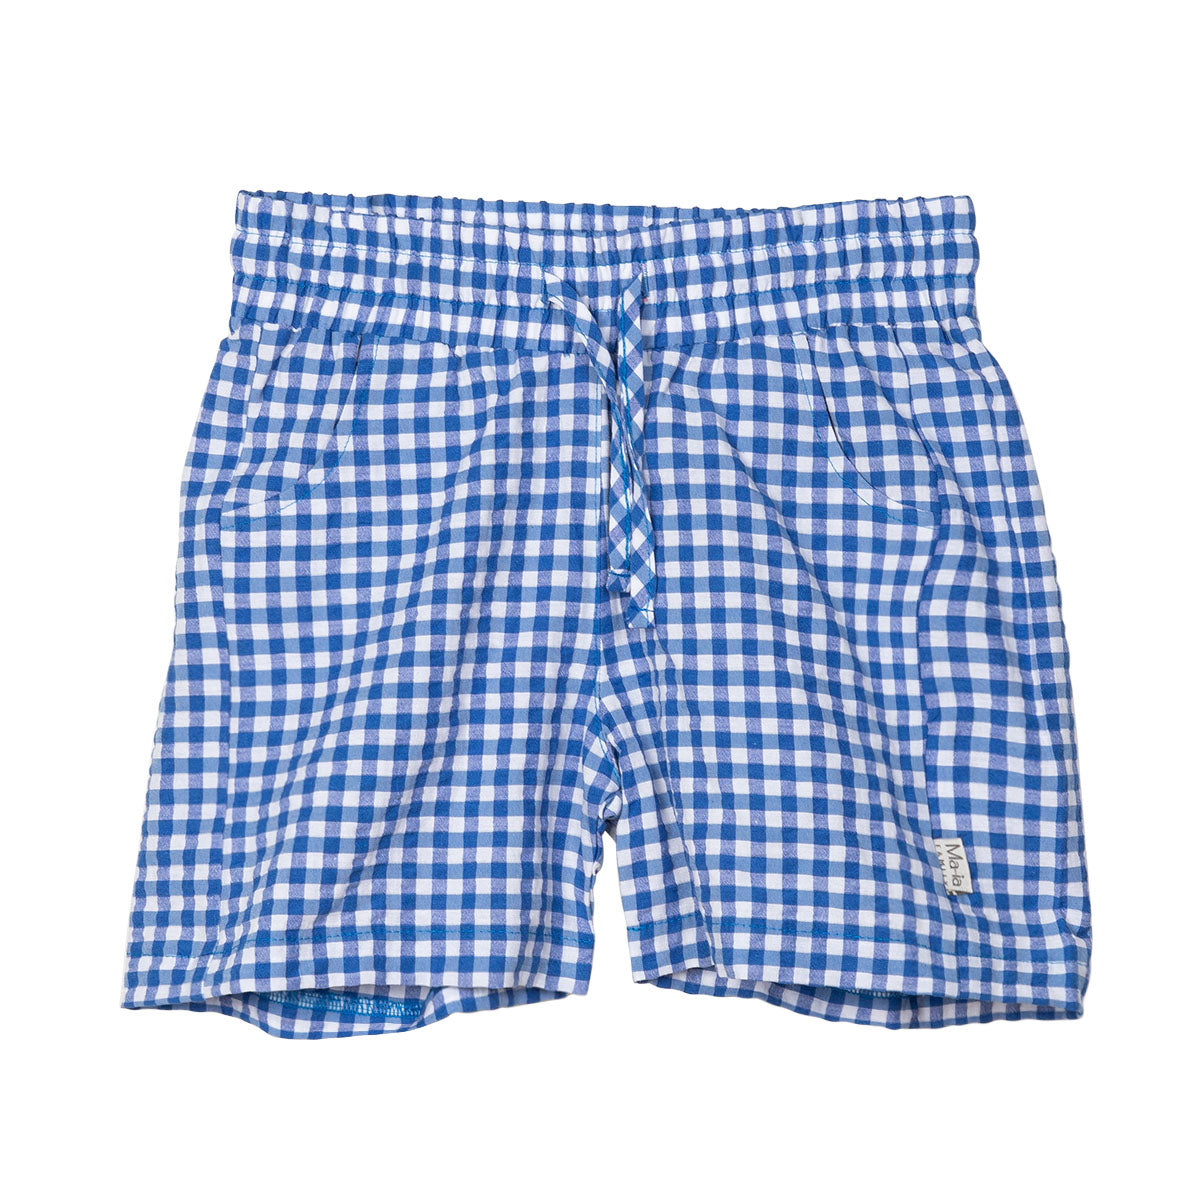 Plaid Shorts, blue